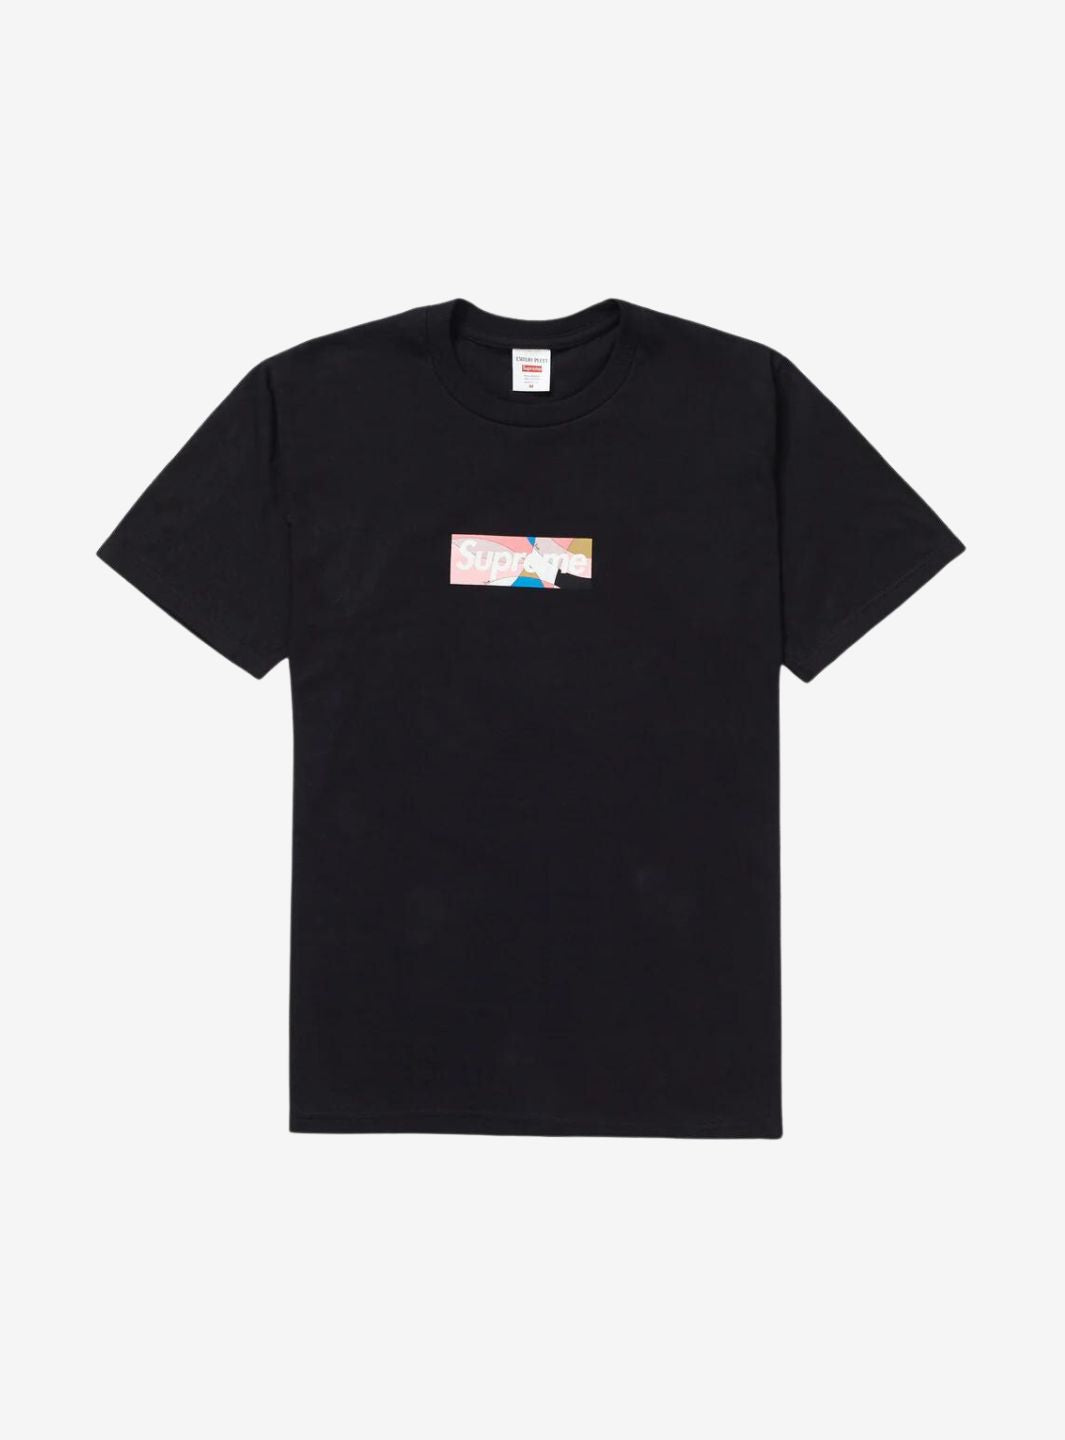 Supreme T-Shirt Emilio Pucci Box Logo Black Pink